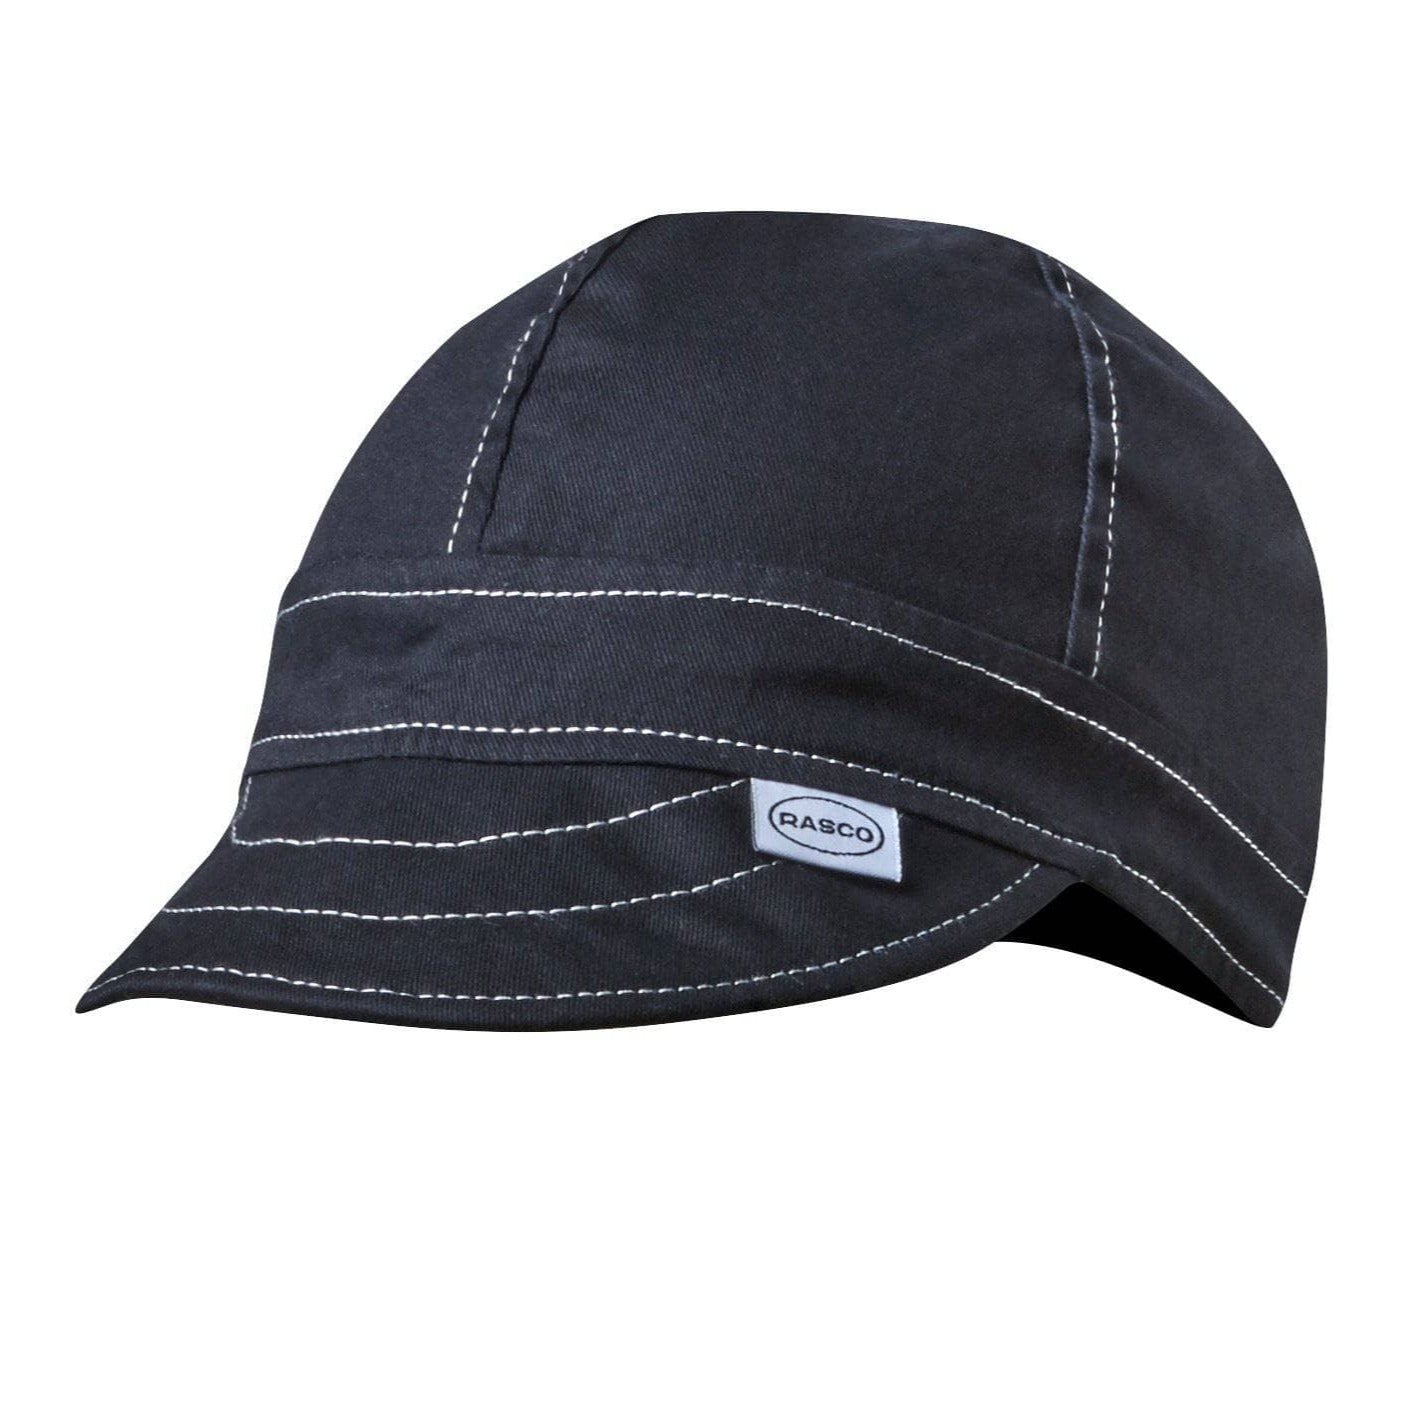 Non-FR Welding Cap - Black (CLOSEOUT) - Rasco FR